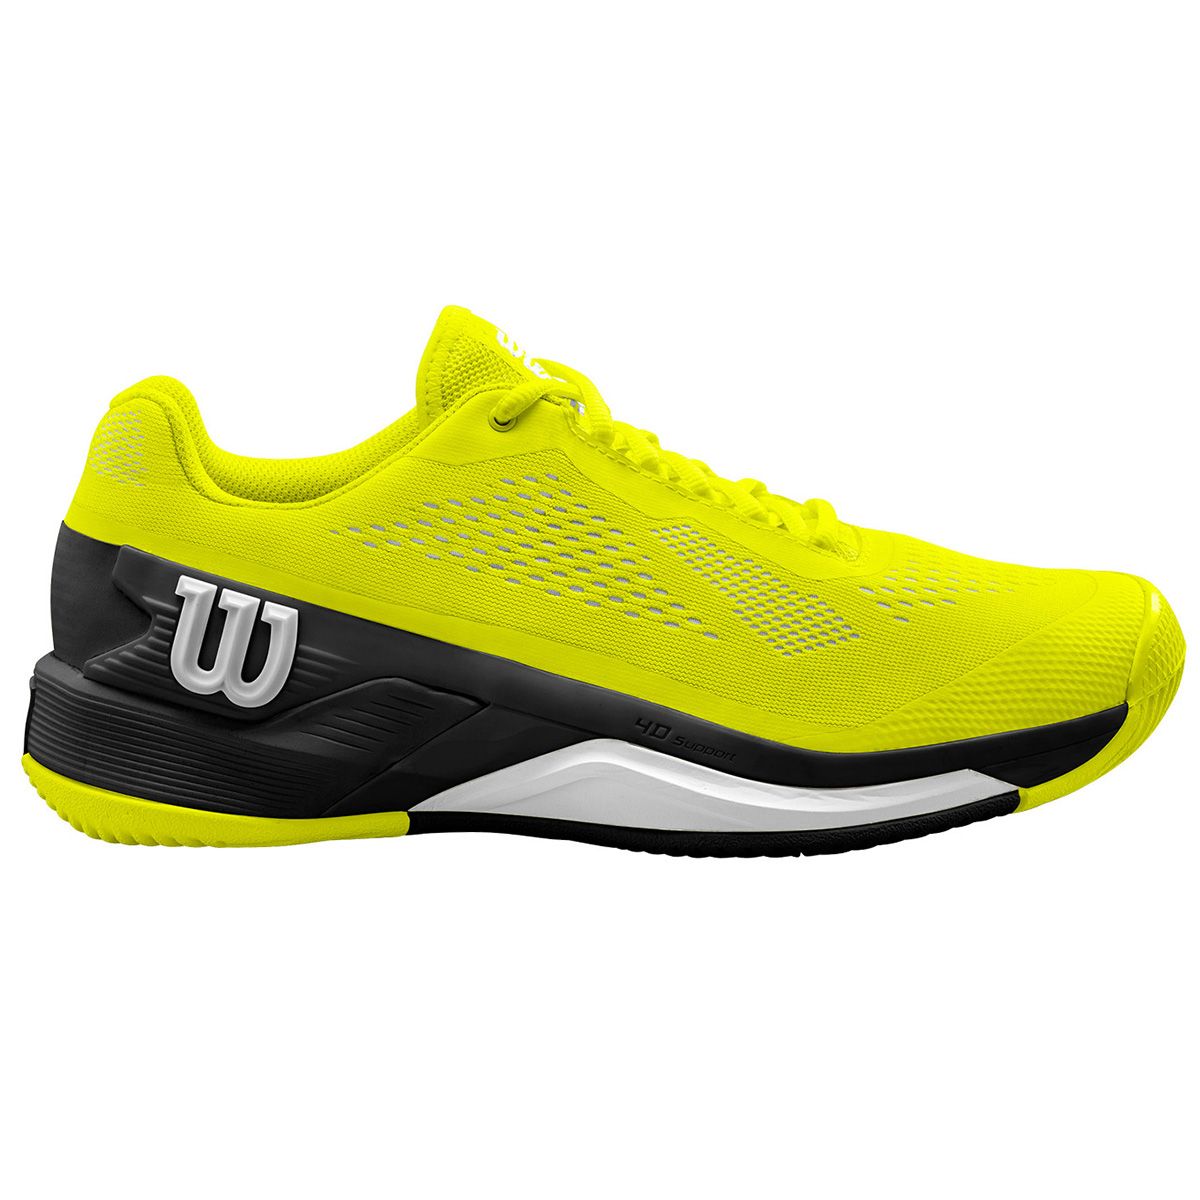 Wilson Rush Pro 4.0 Men's Tennis Shoes WRS328610